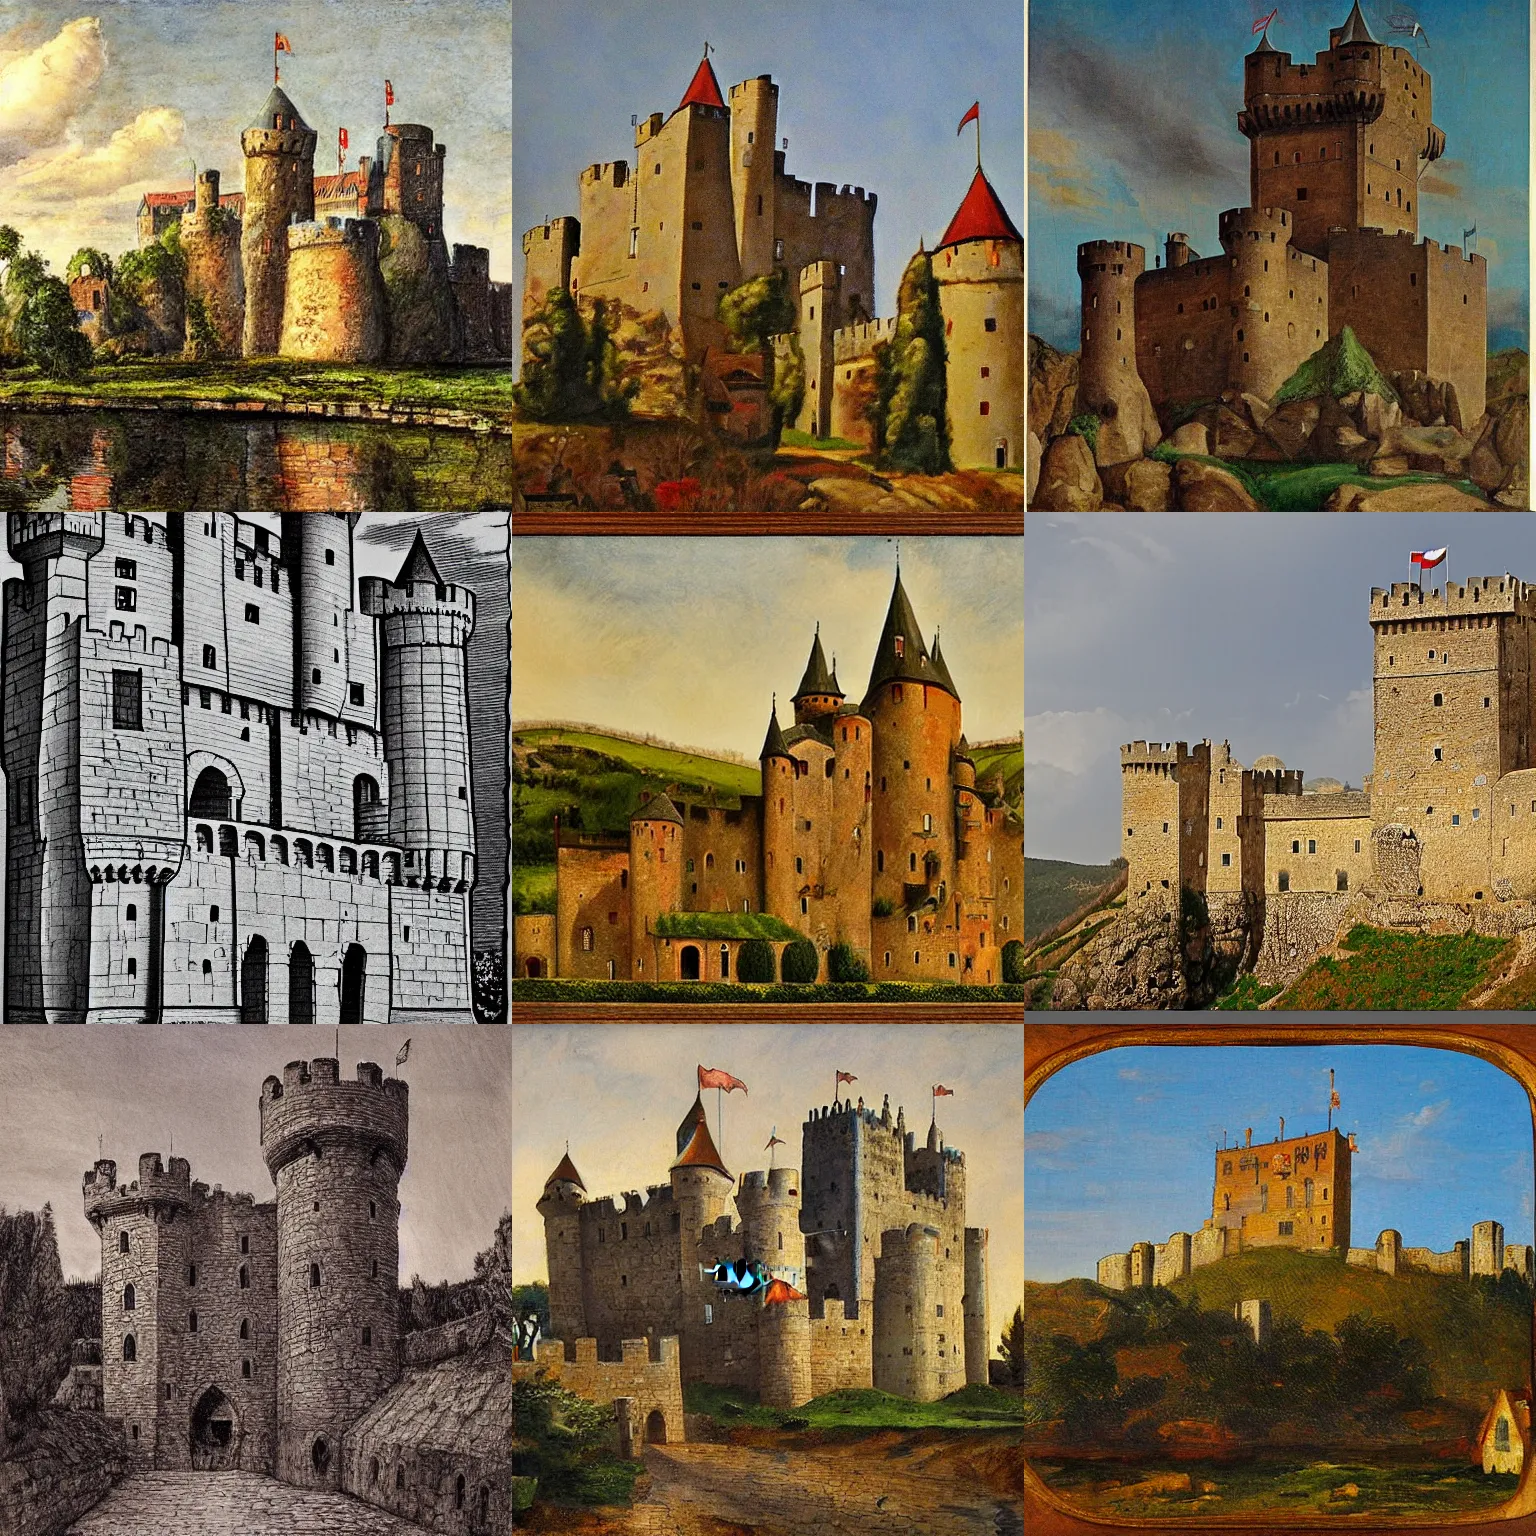 Prompt: medieval castle, by henryk gotlib